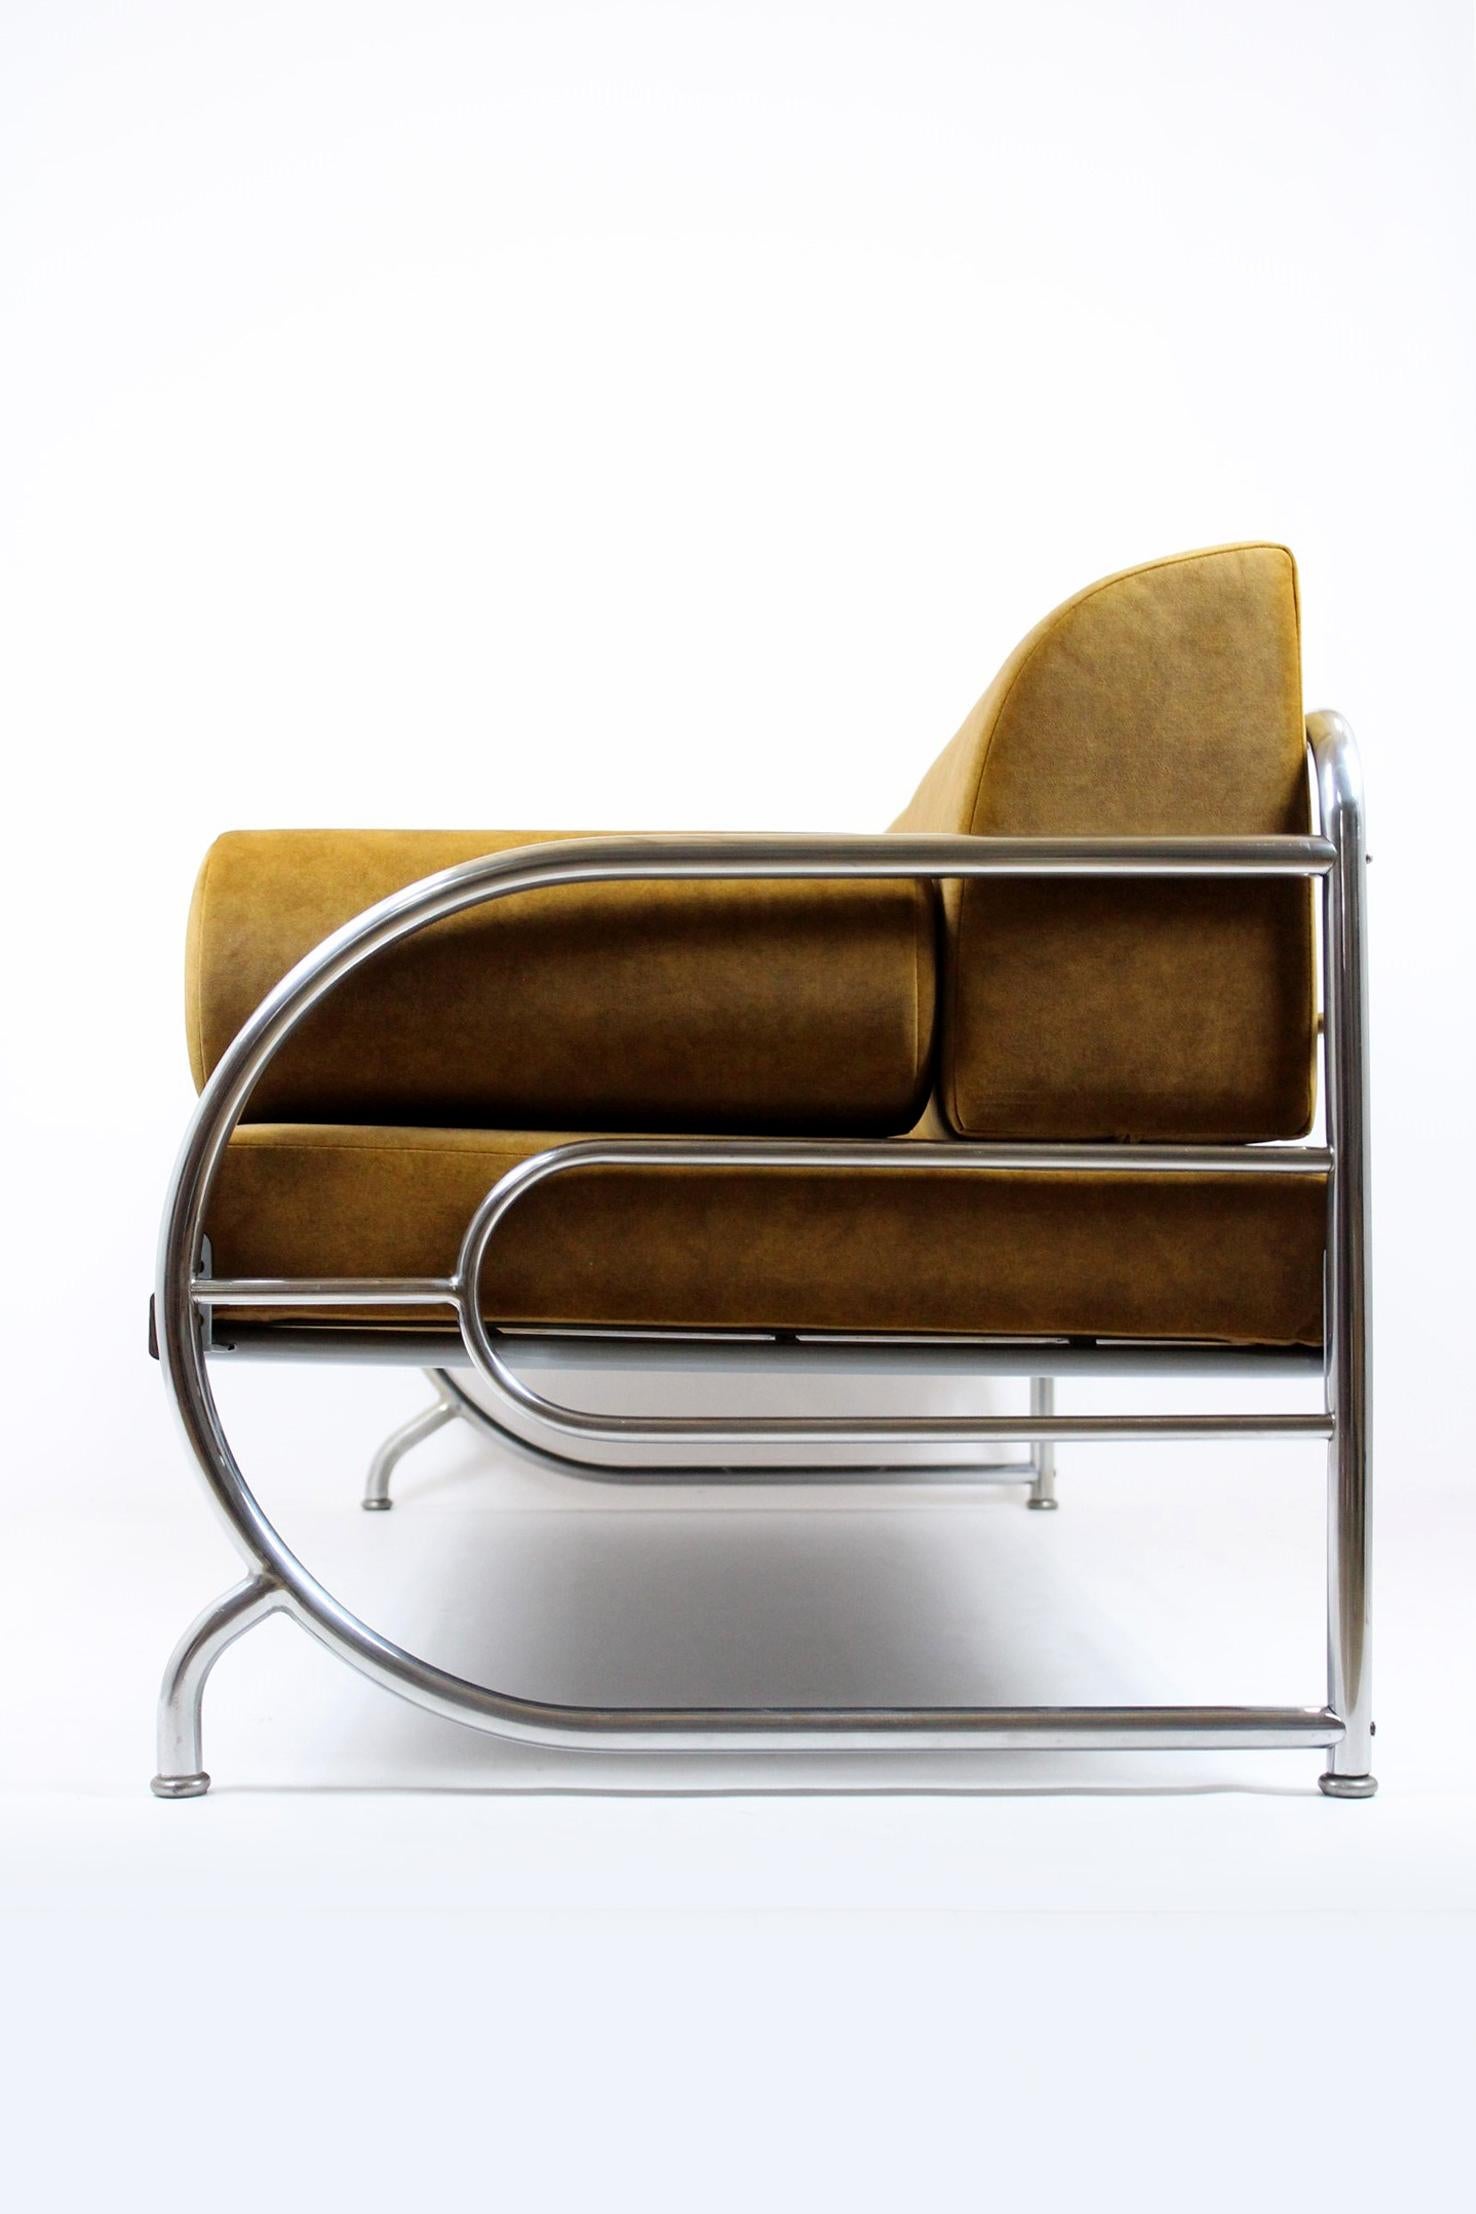 Restored Bauhaus Tubular Chrome Steel Sofa from Hynek Gottwald, 1930s For Sale 4